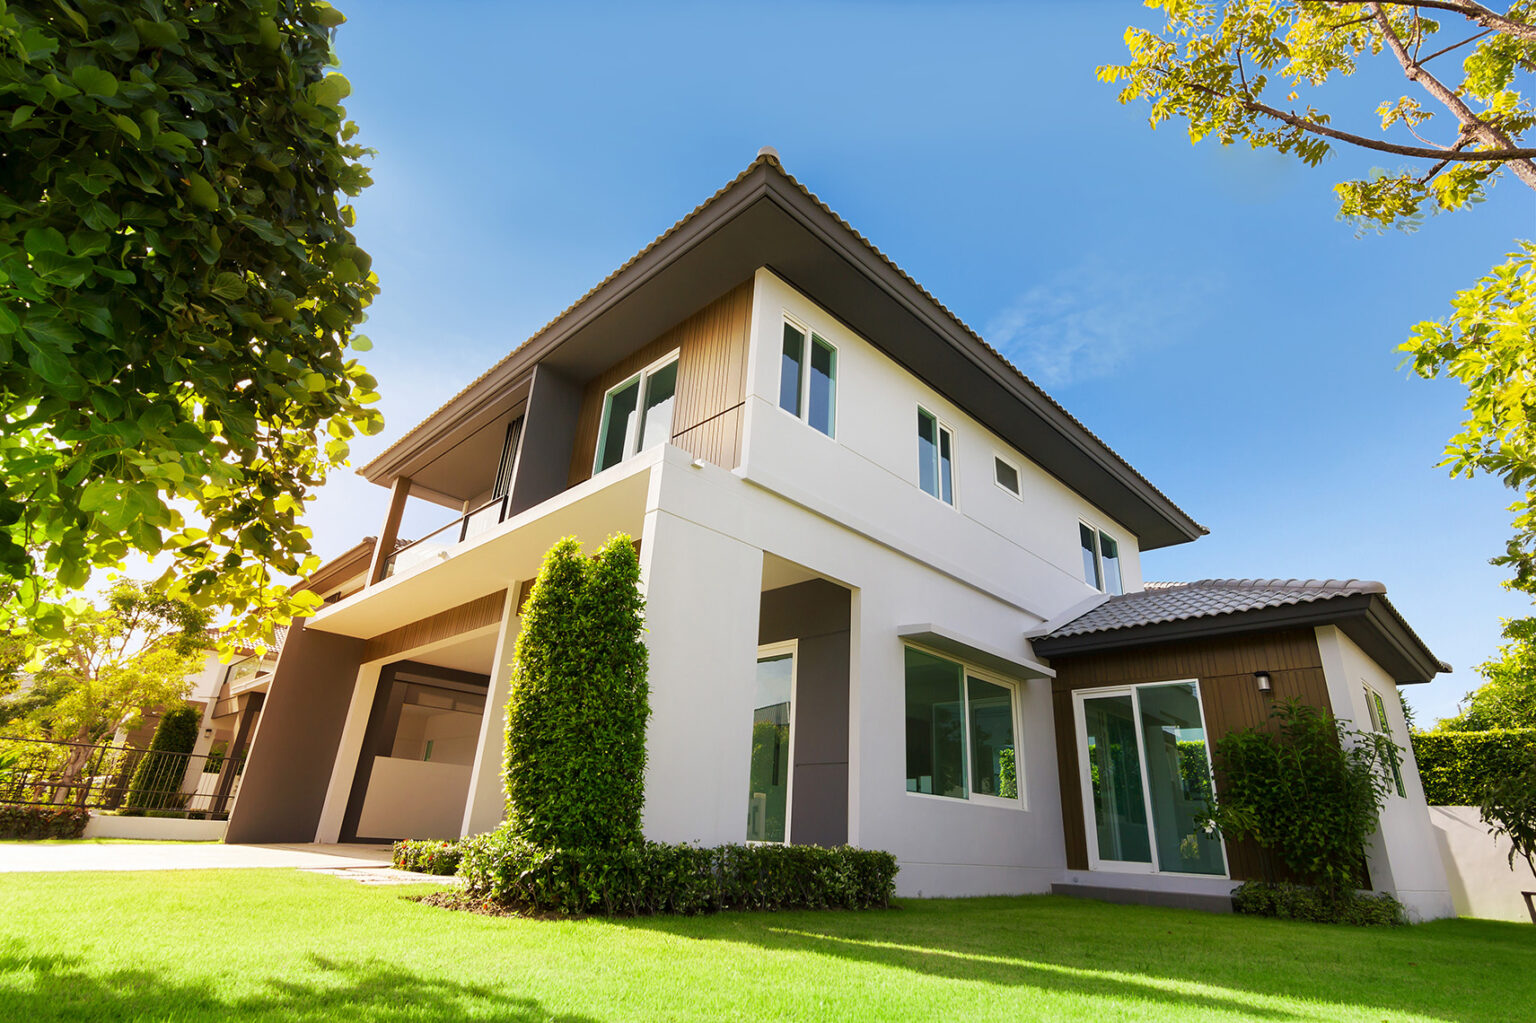 Conforming Loan Limit Increases to 548,250 Trailblazer Mortgage, LLC